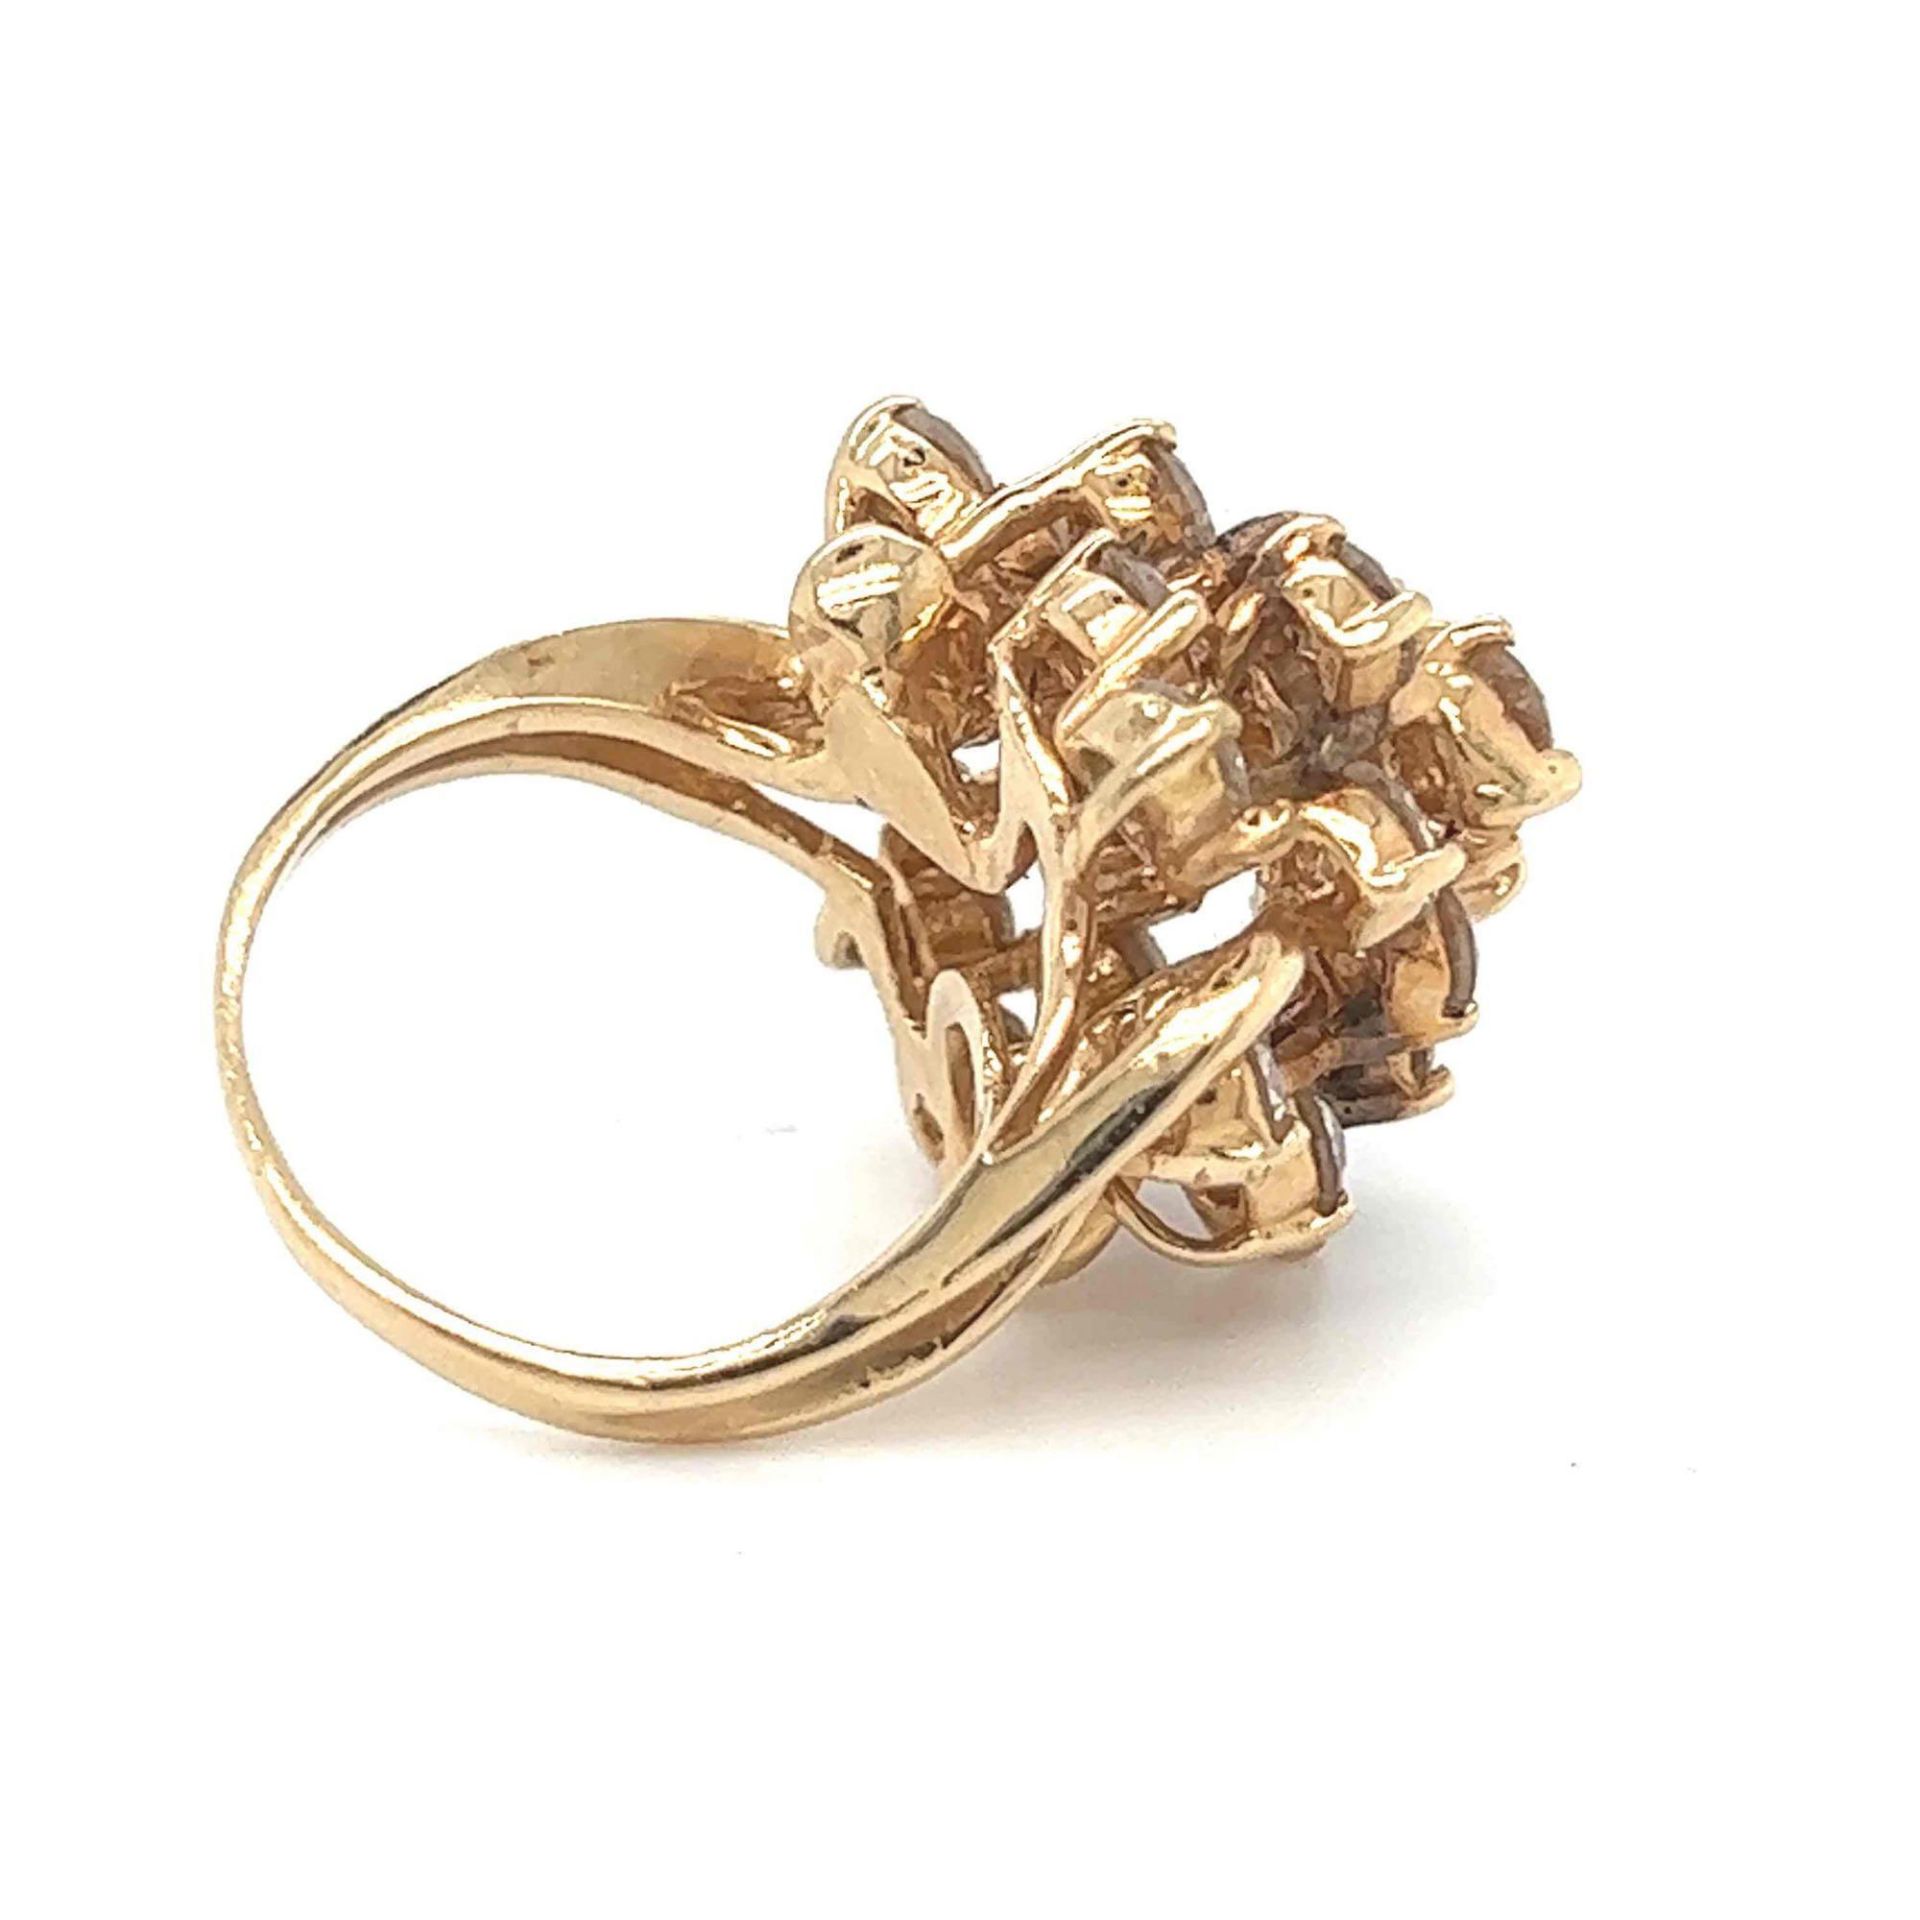 ESTATE LARGE DIAMOND CLUSTER RING 14K GOLD - Image 5 of 6